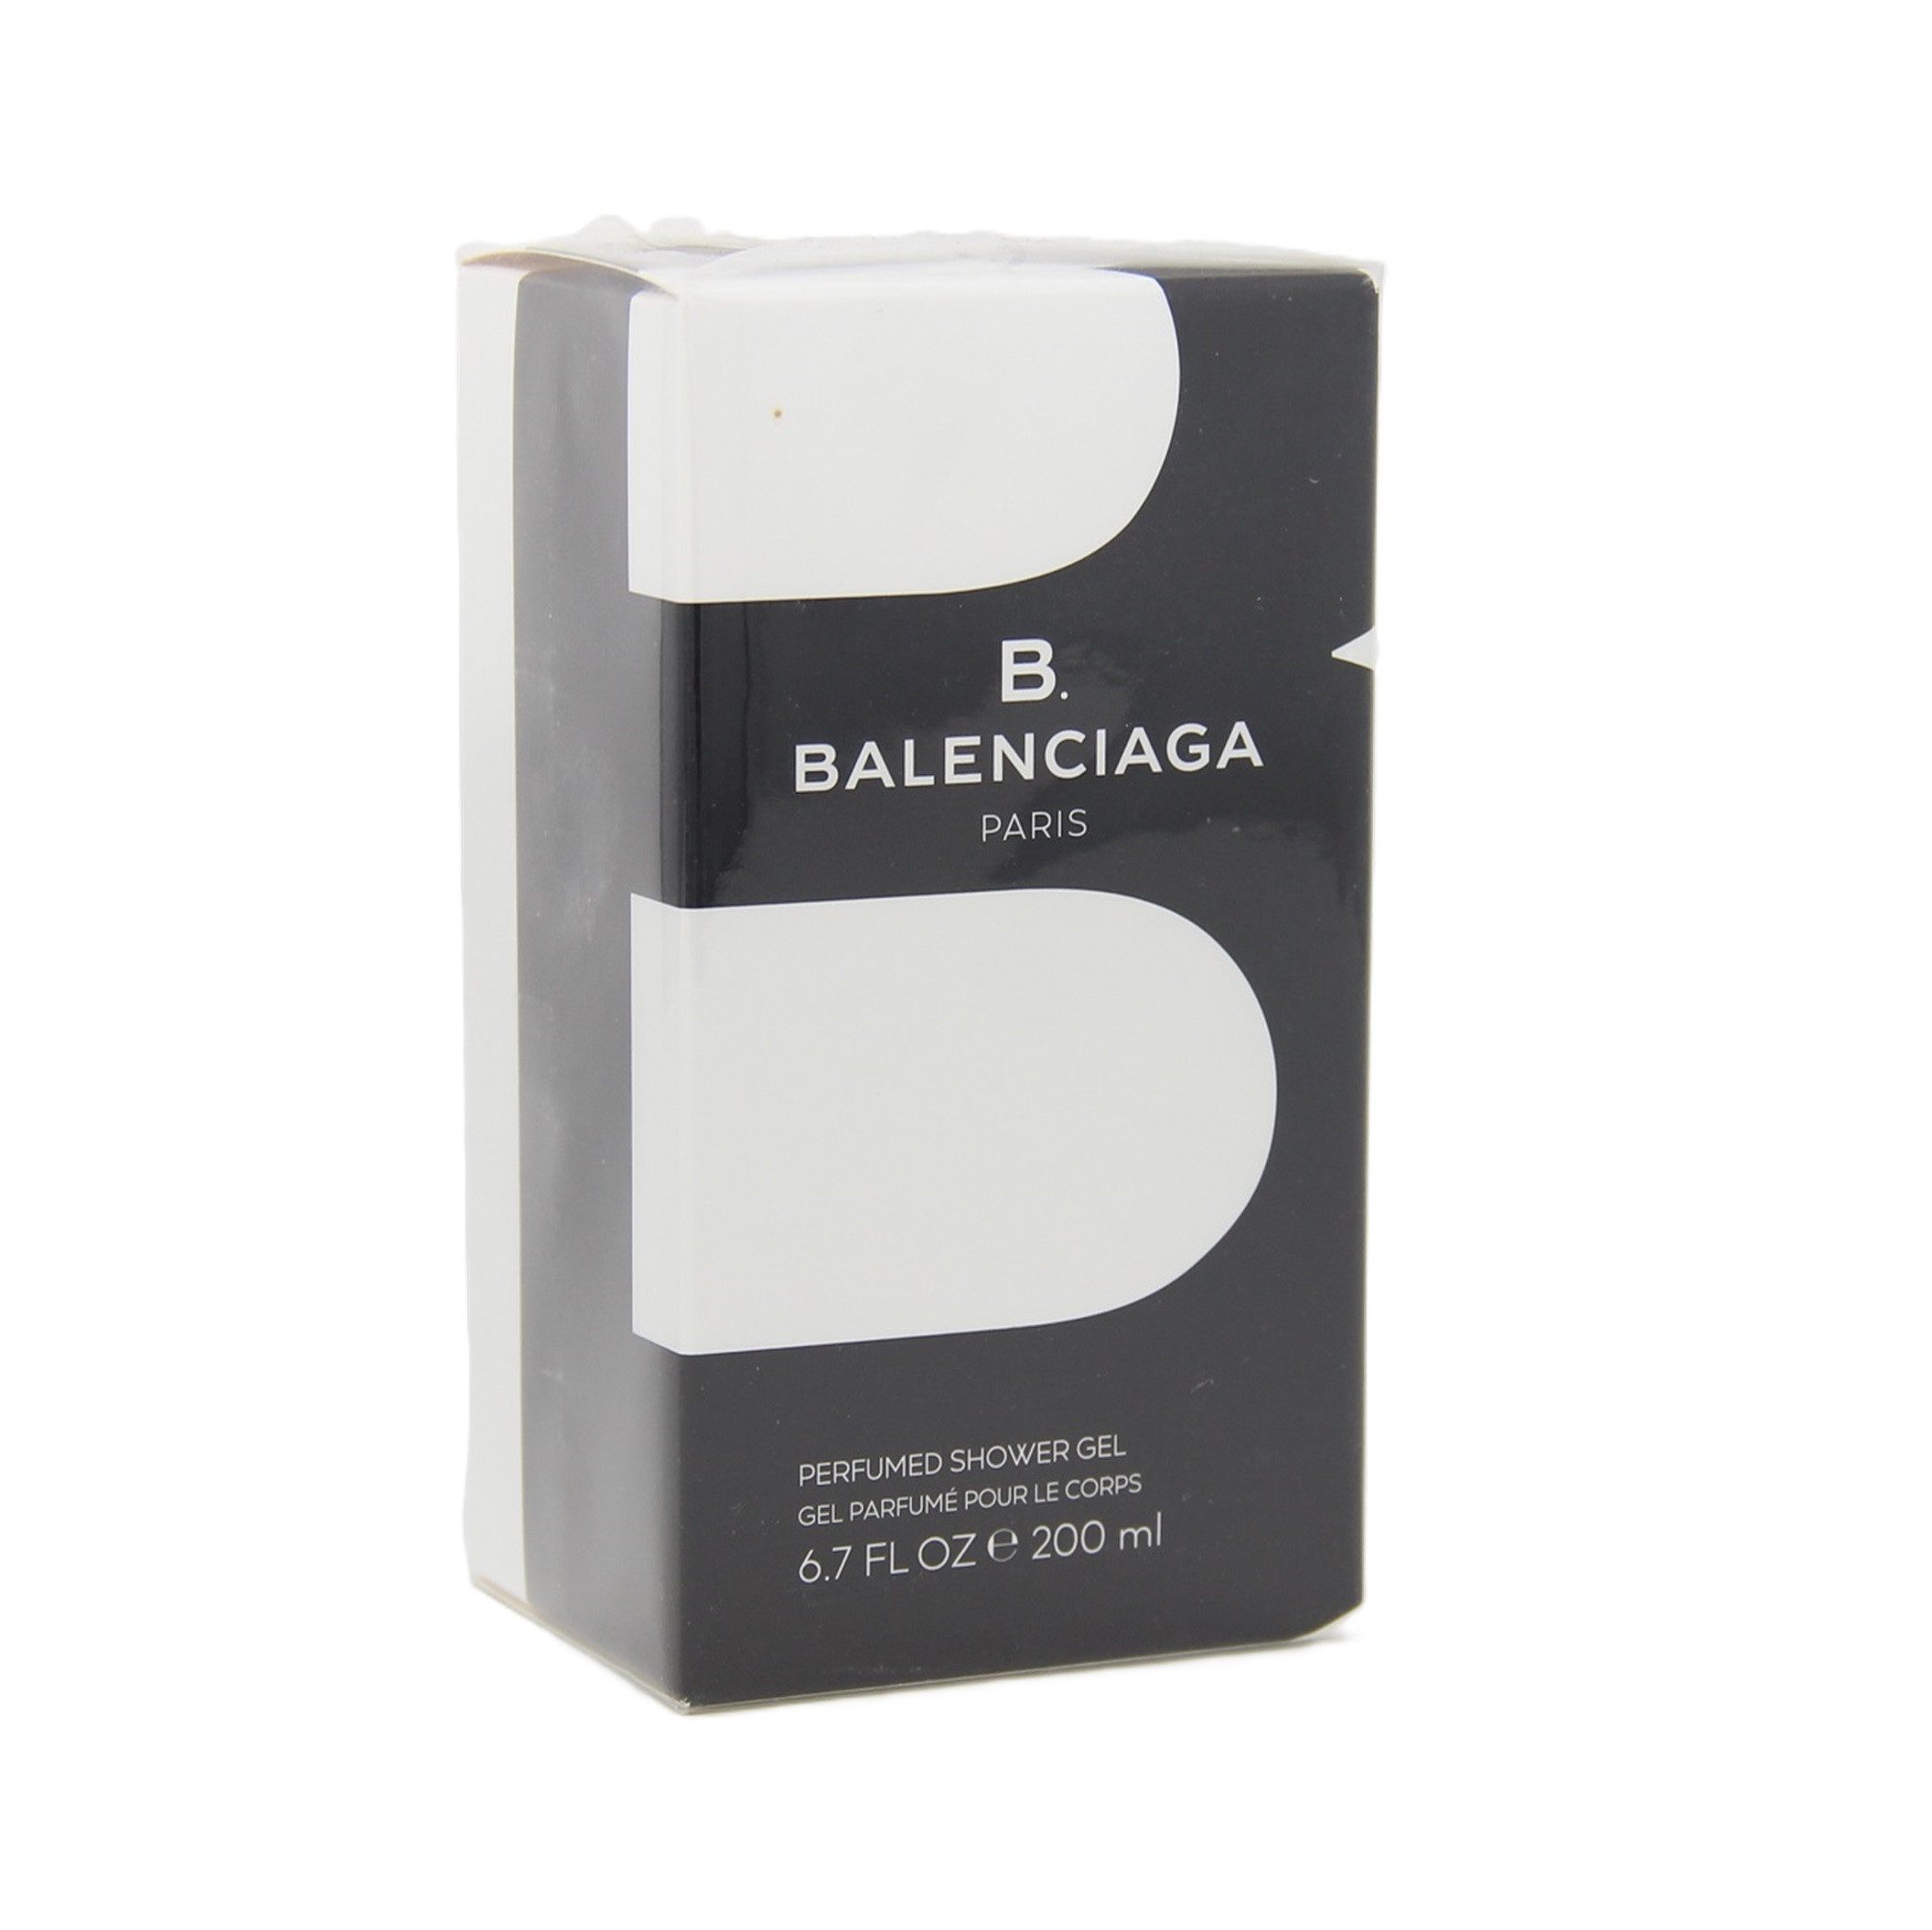 Balenciaga Duschgel Balenciaga B. Perfumed Shower Gel 200ml